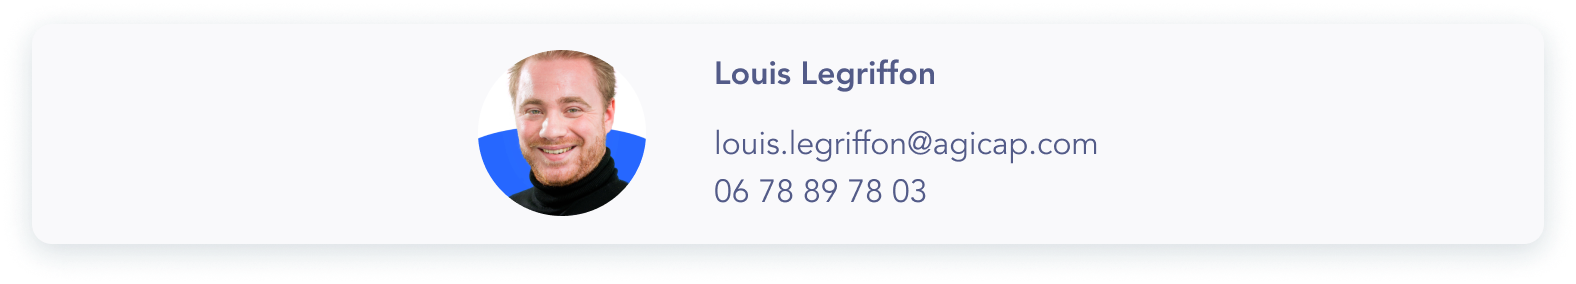 Contact Louis Legriffon